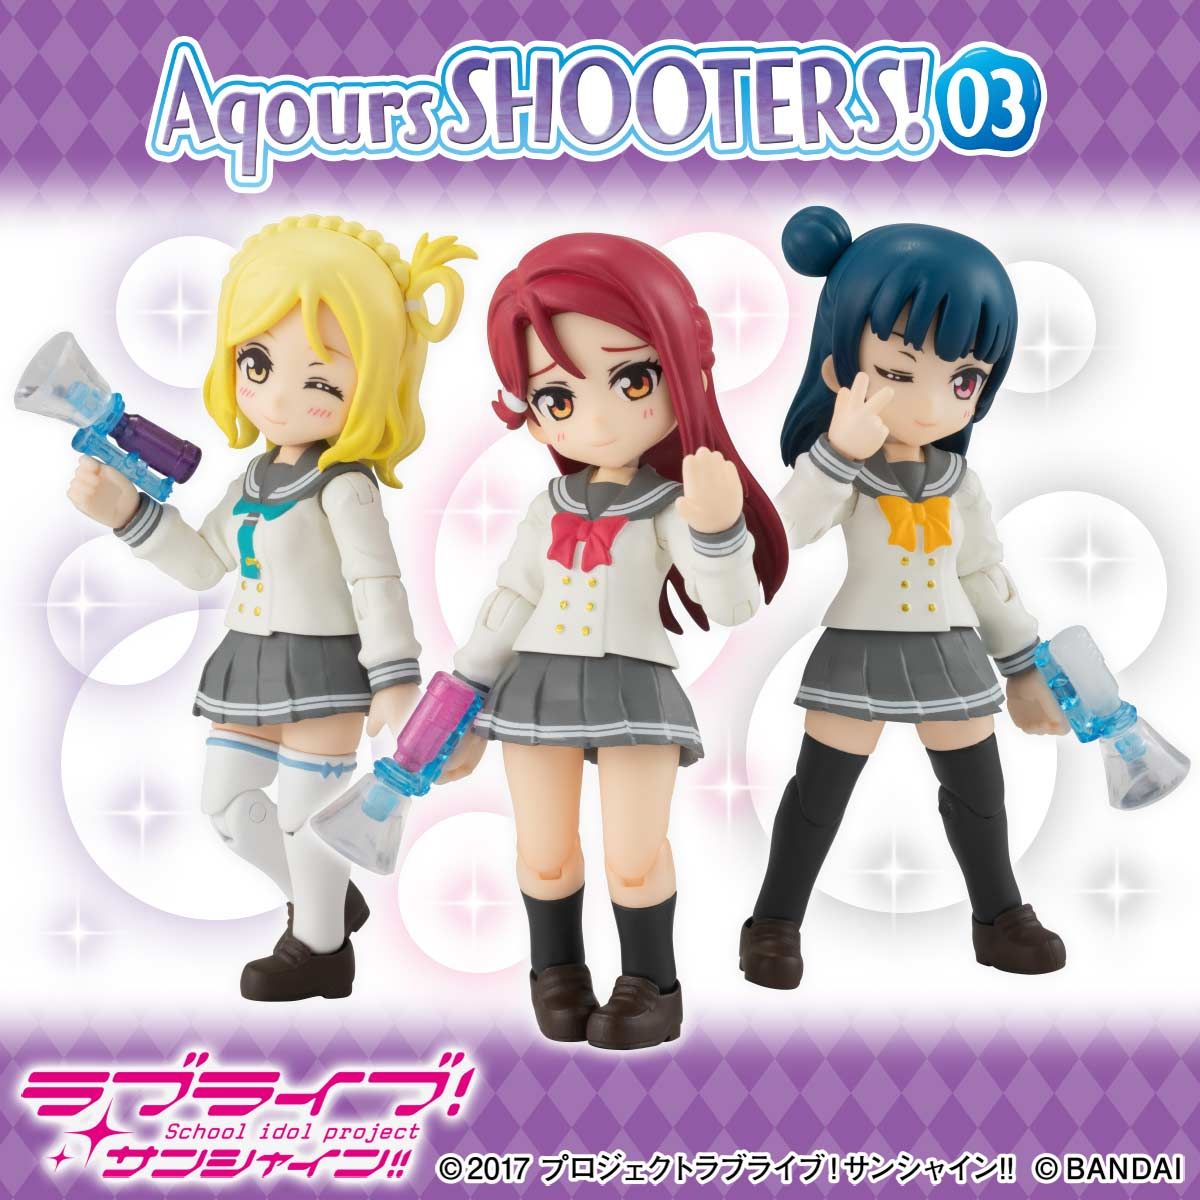 Aqours shooters 01 02 03 セット